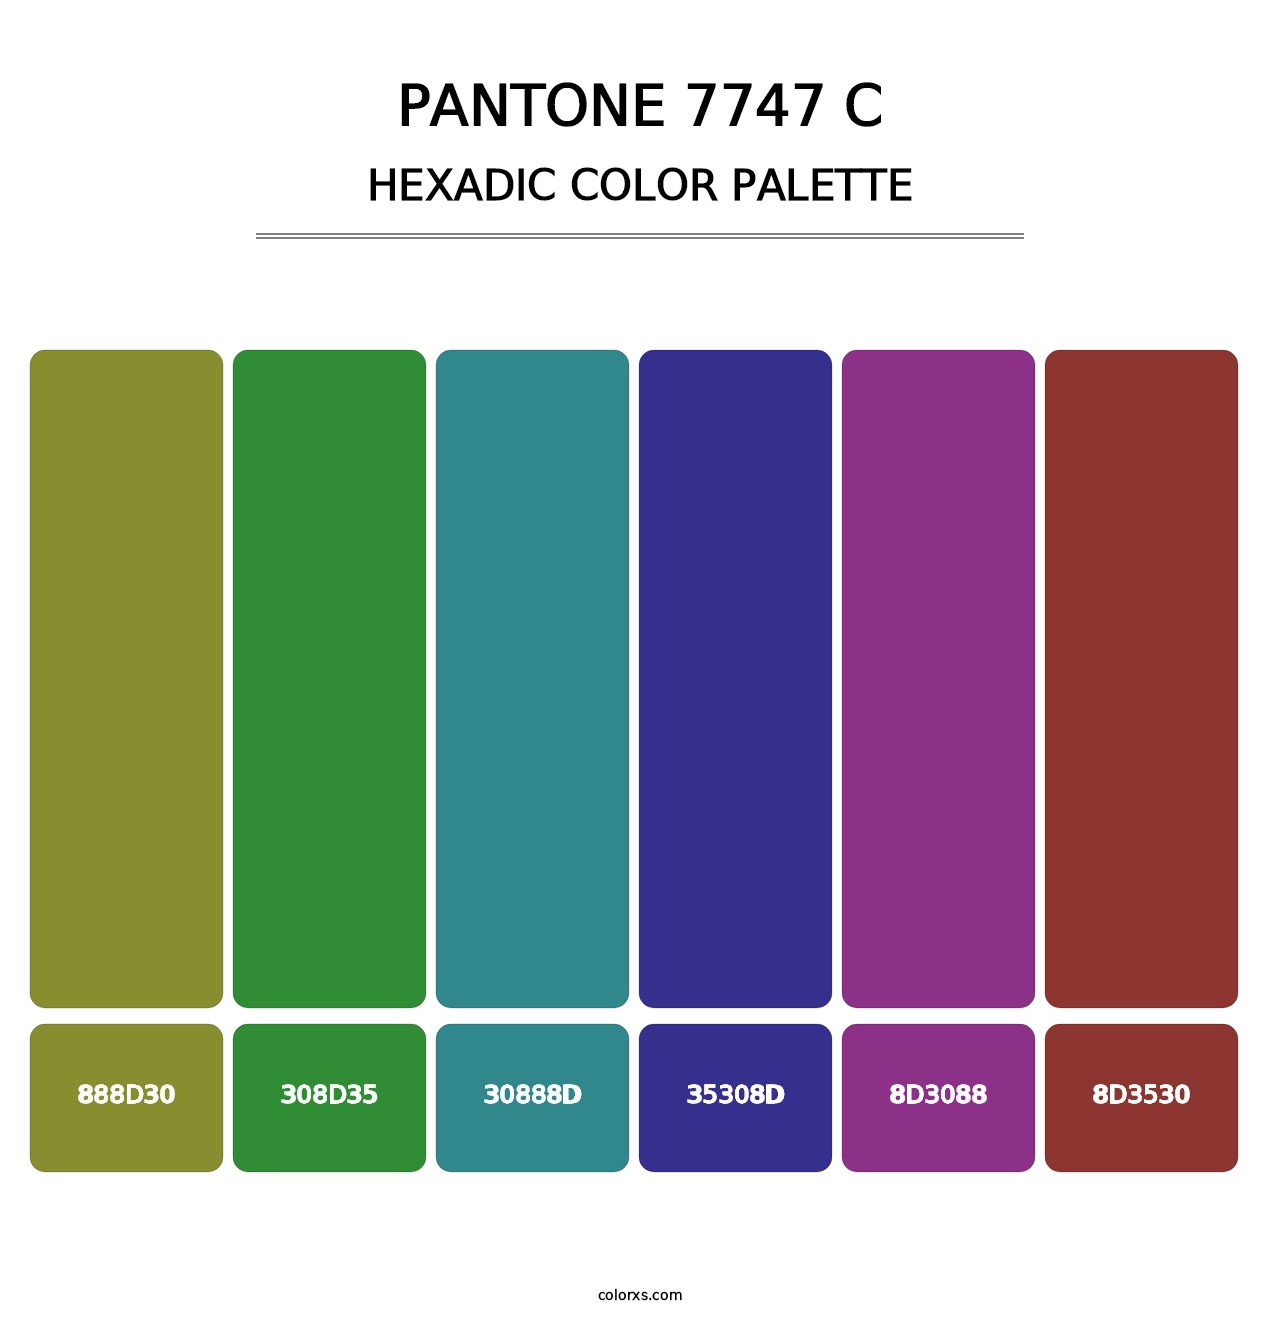 PANTONE 7747 C - Hexadic Color Palette